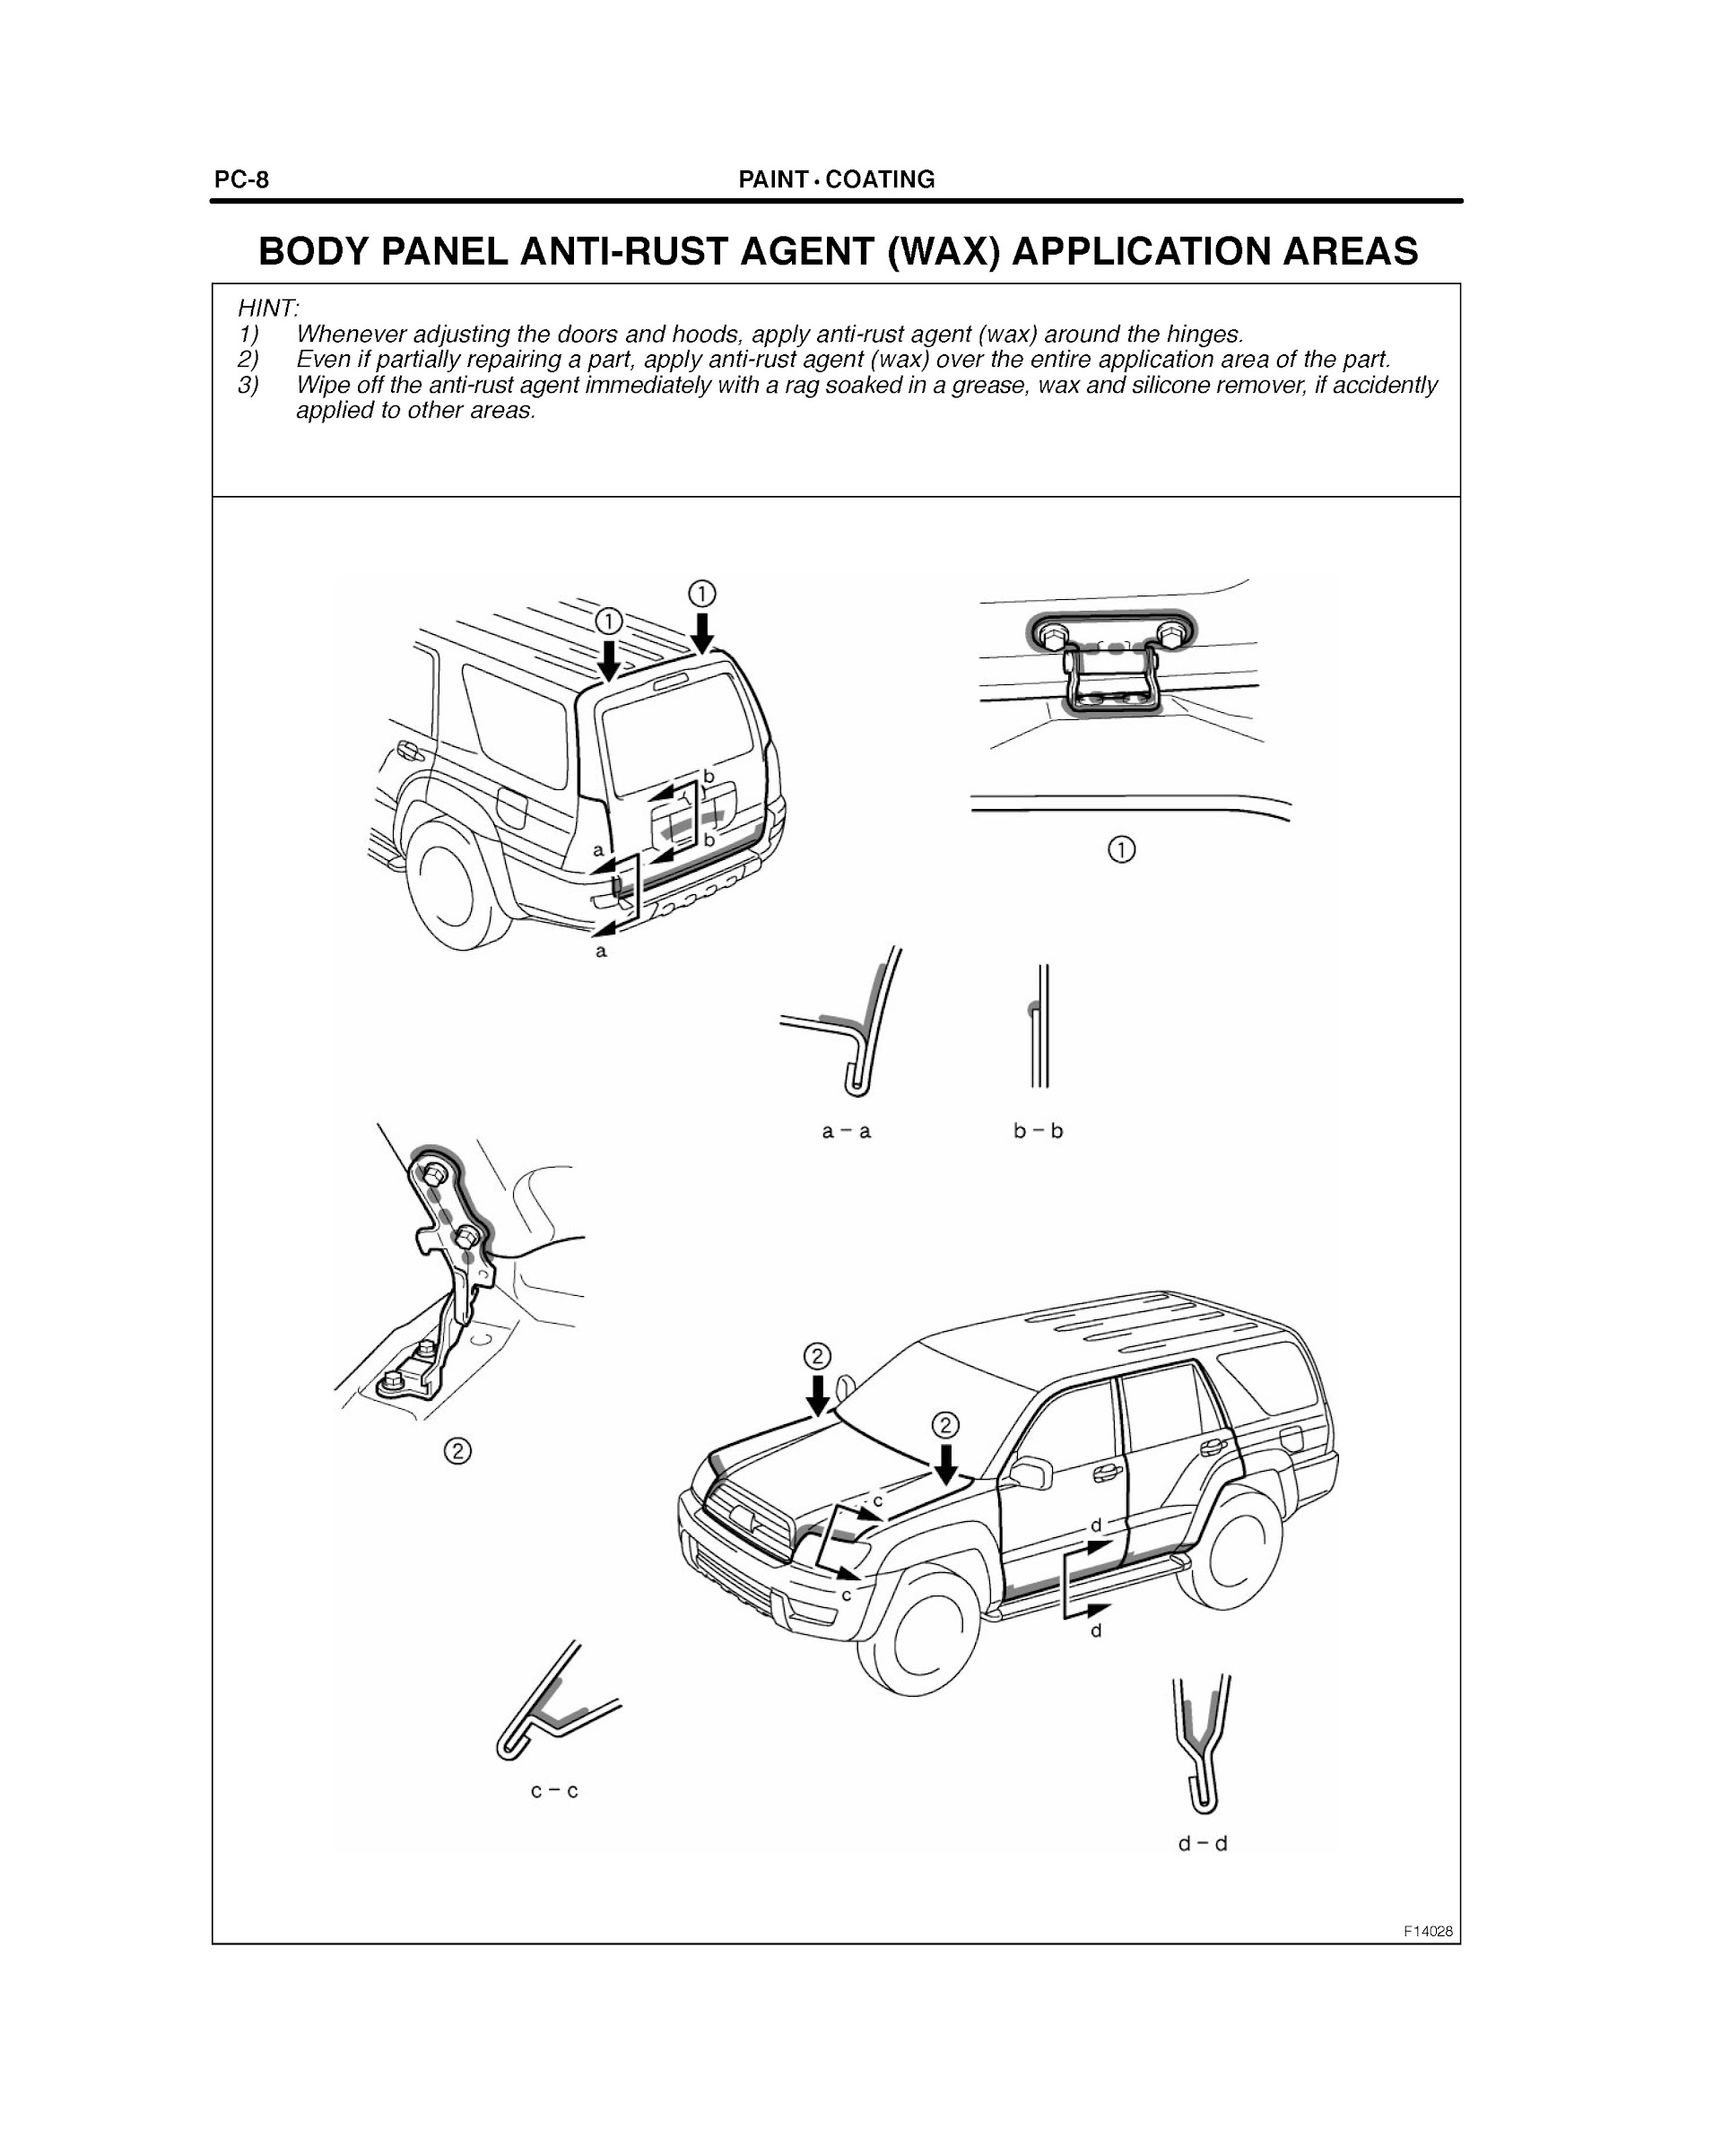 2007 Toyota 4Runner Repair Manual, Body Panel Anti-Rust Agent (Wax) Application Areas